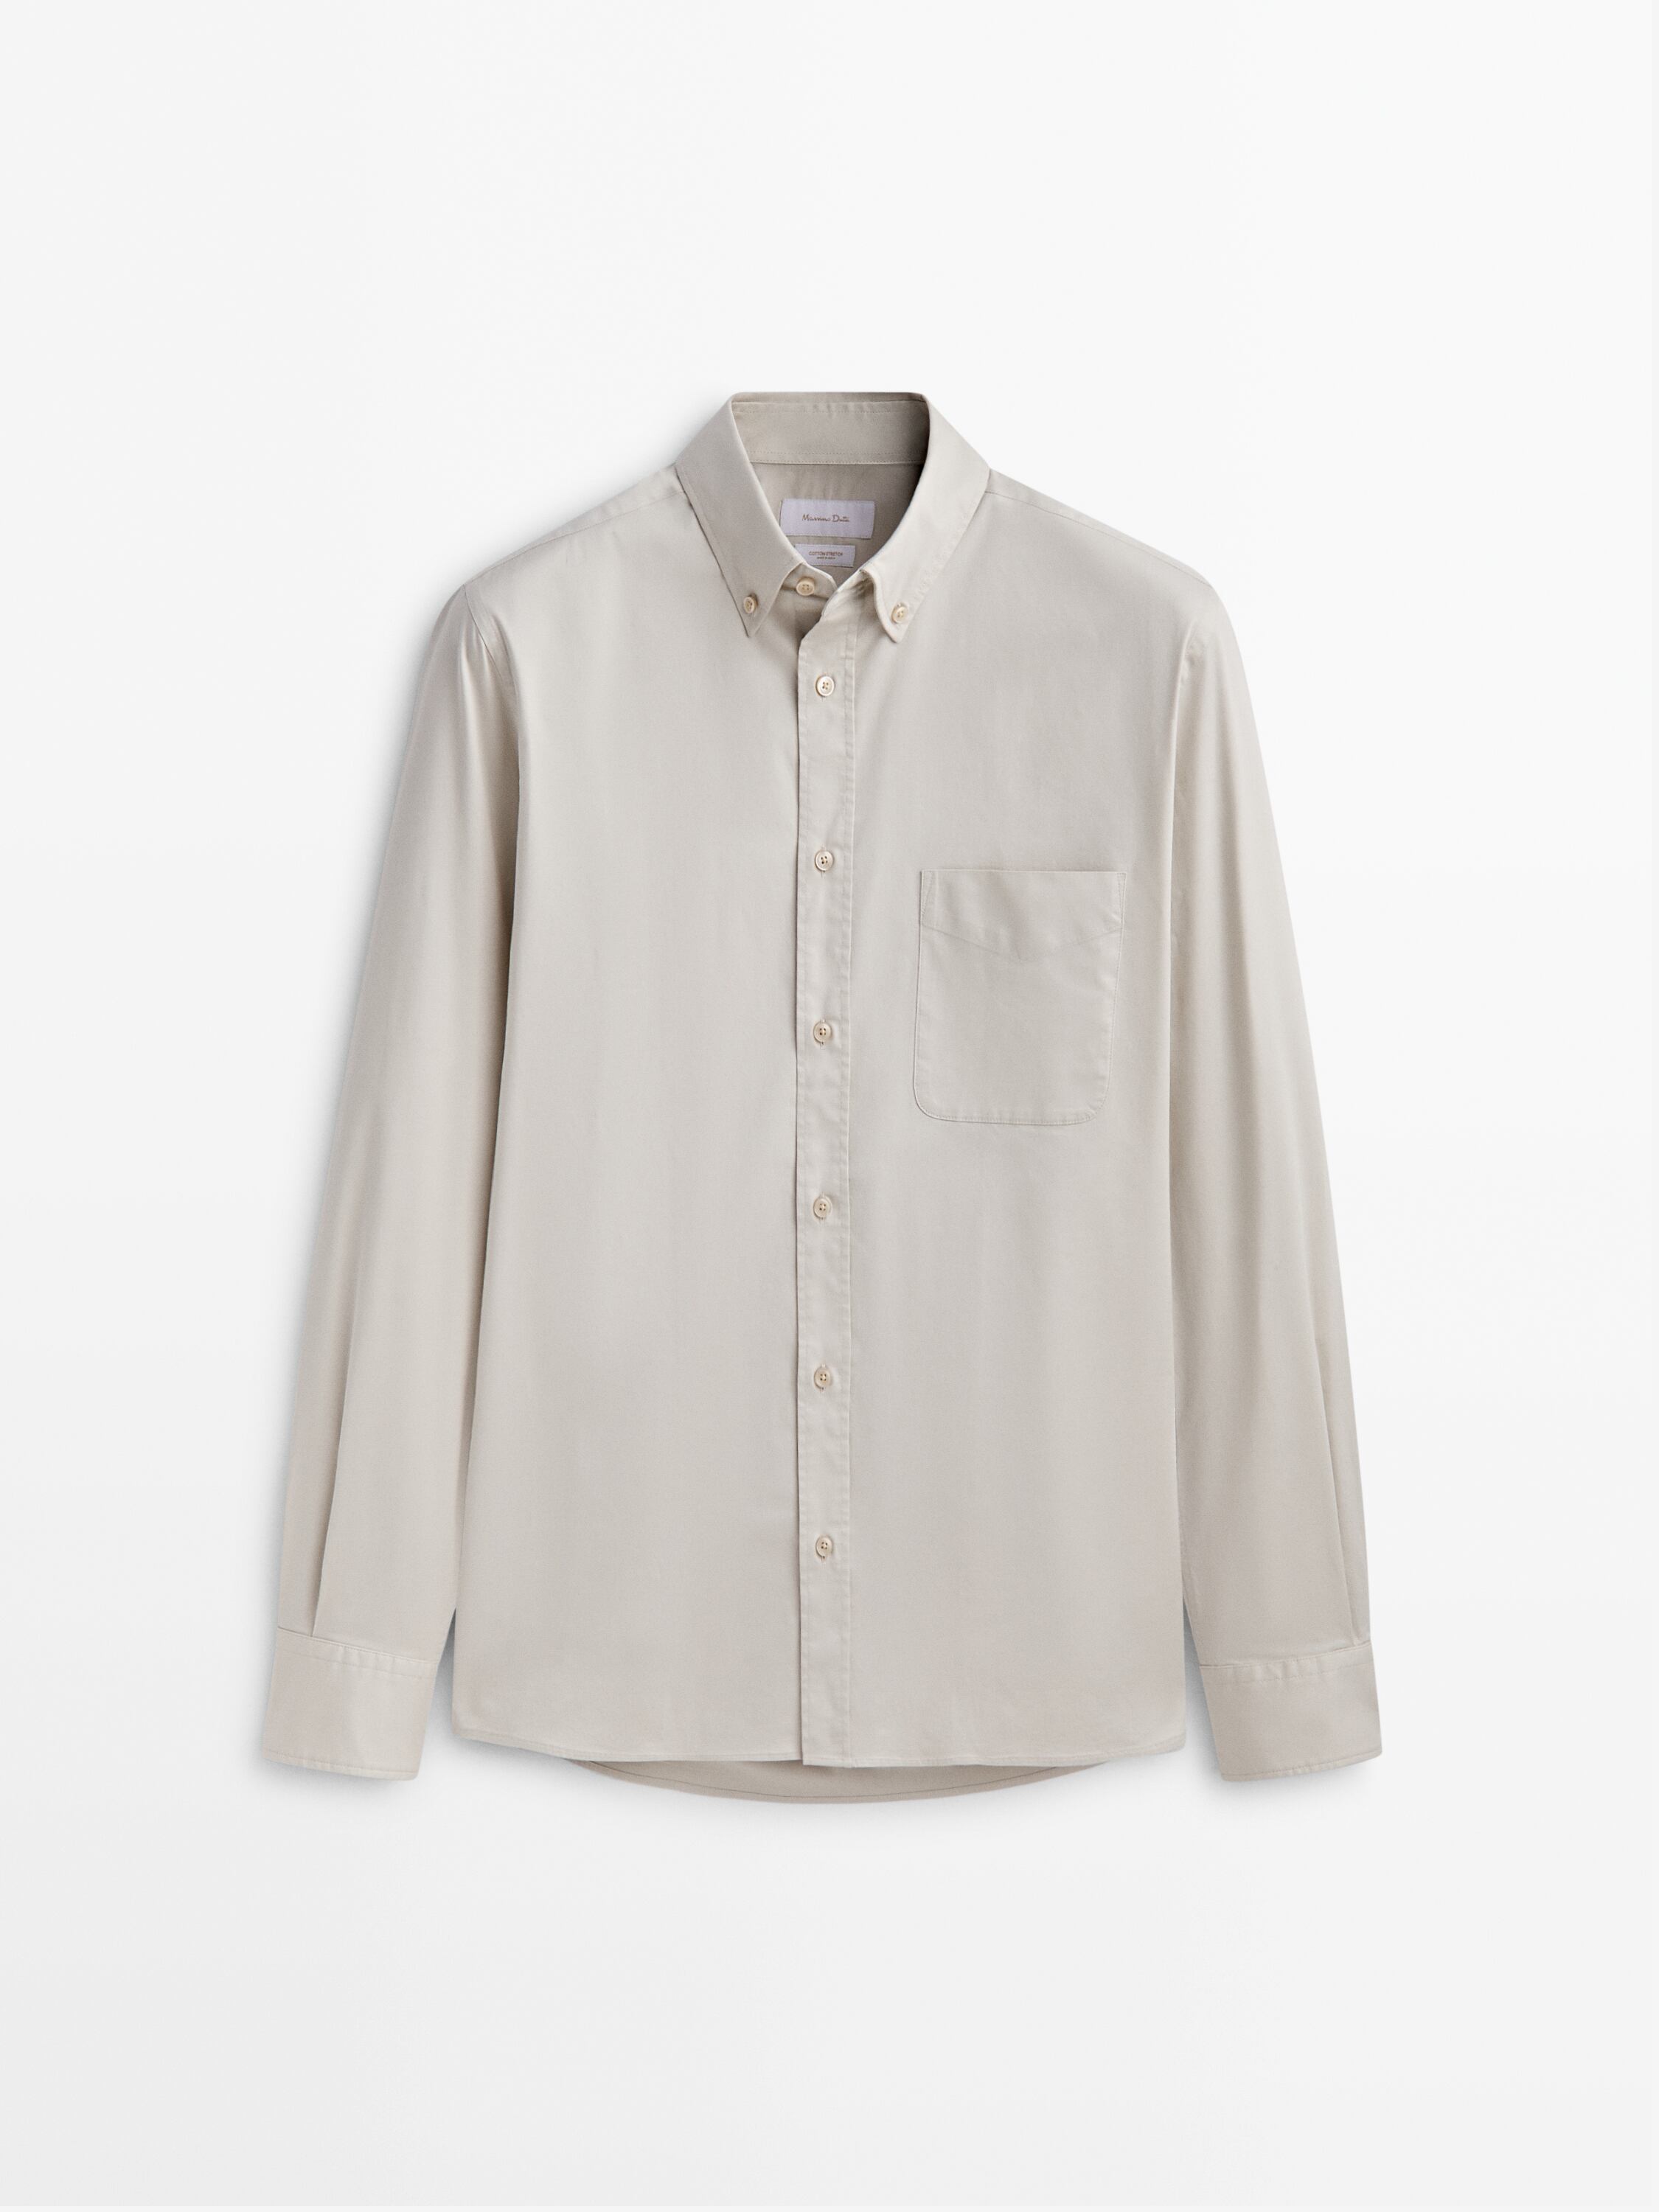 Regular fit stretchy cotton blend shirt with pocket